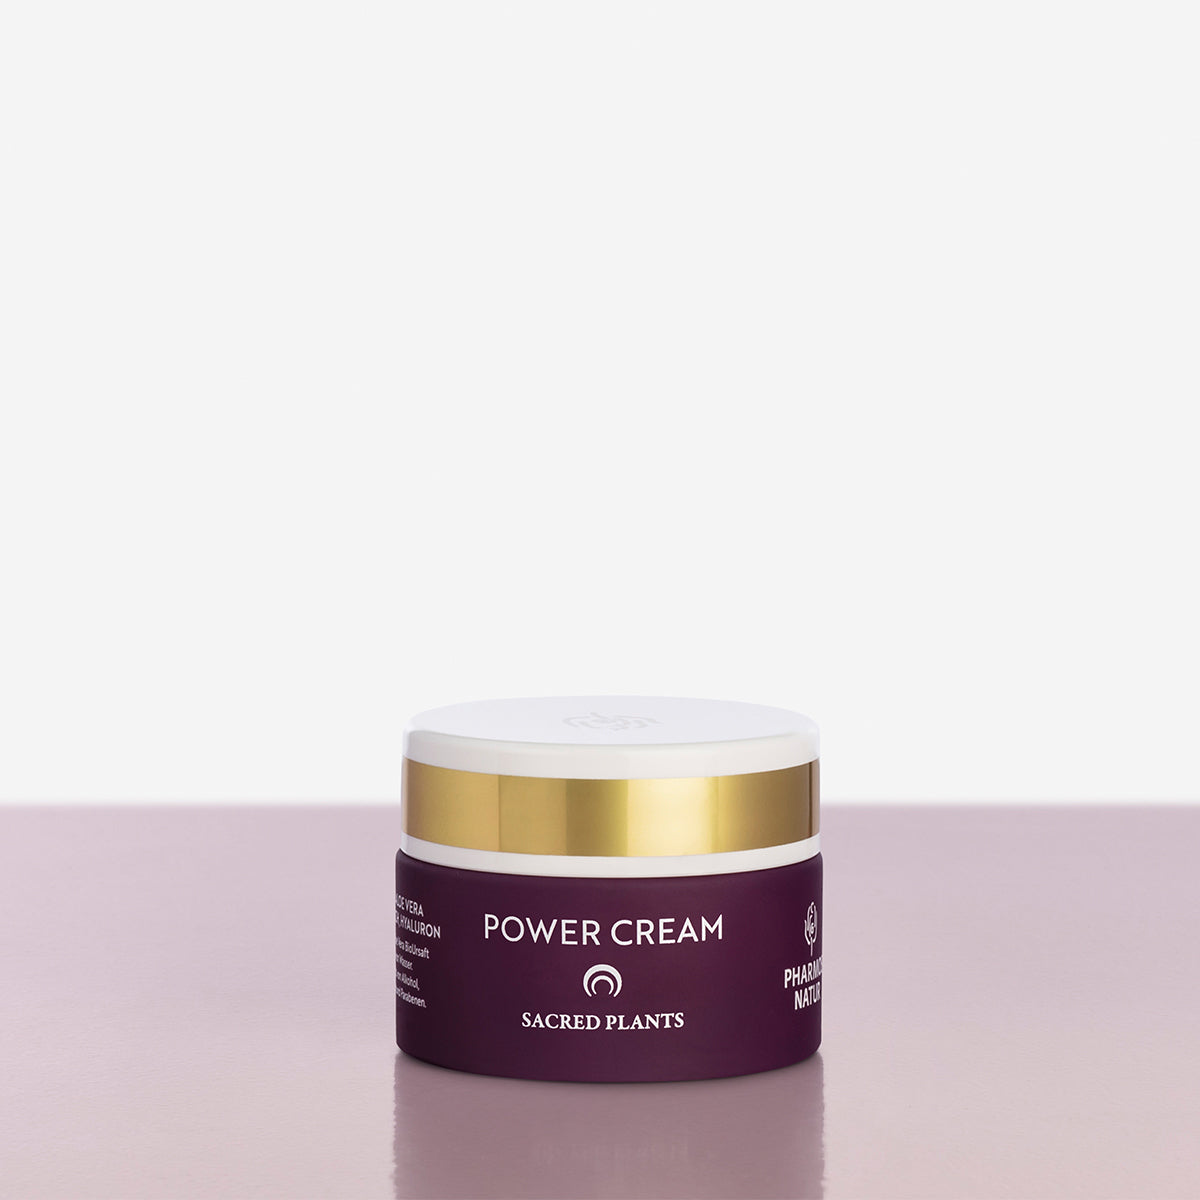 Power Cream